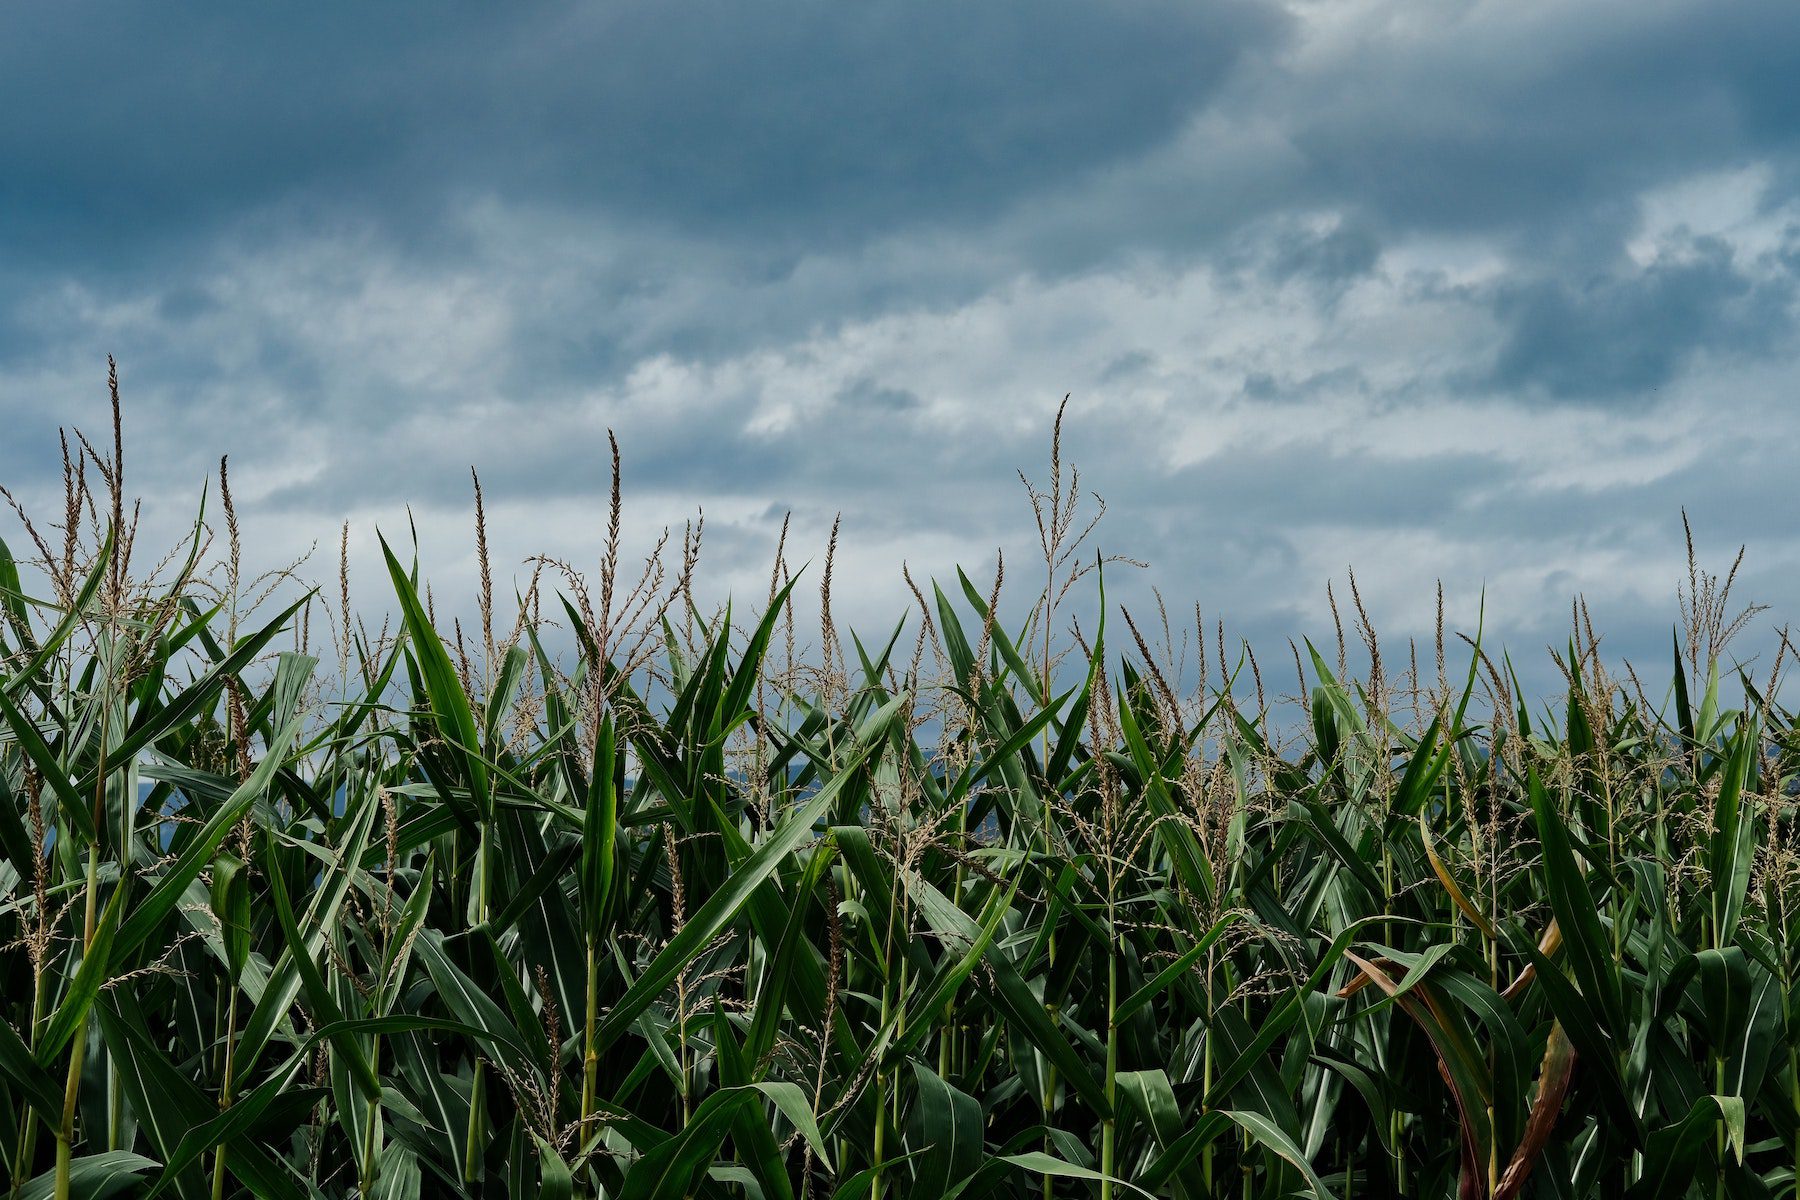 A dark cornfield under an ominous stormy sky.